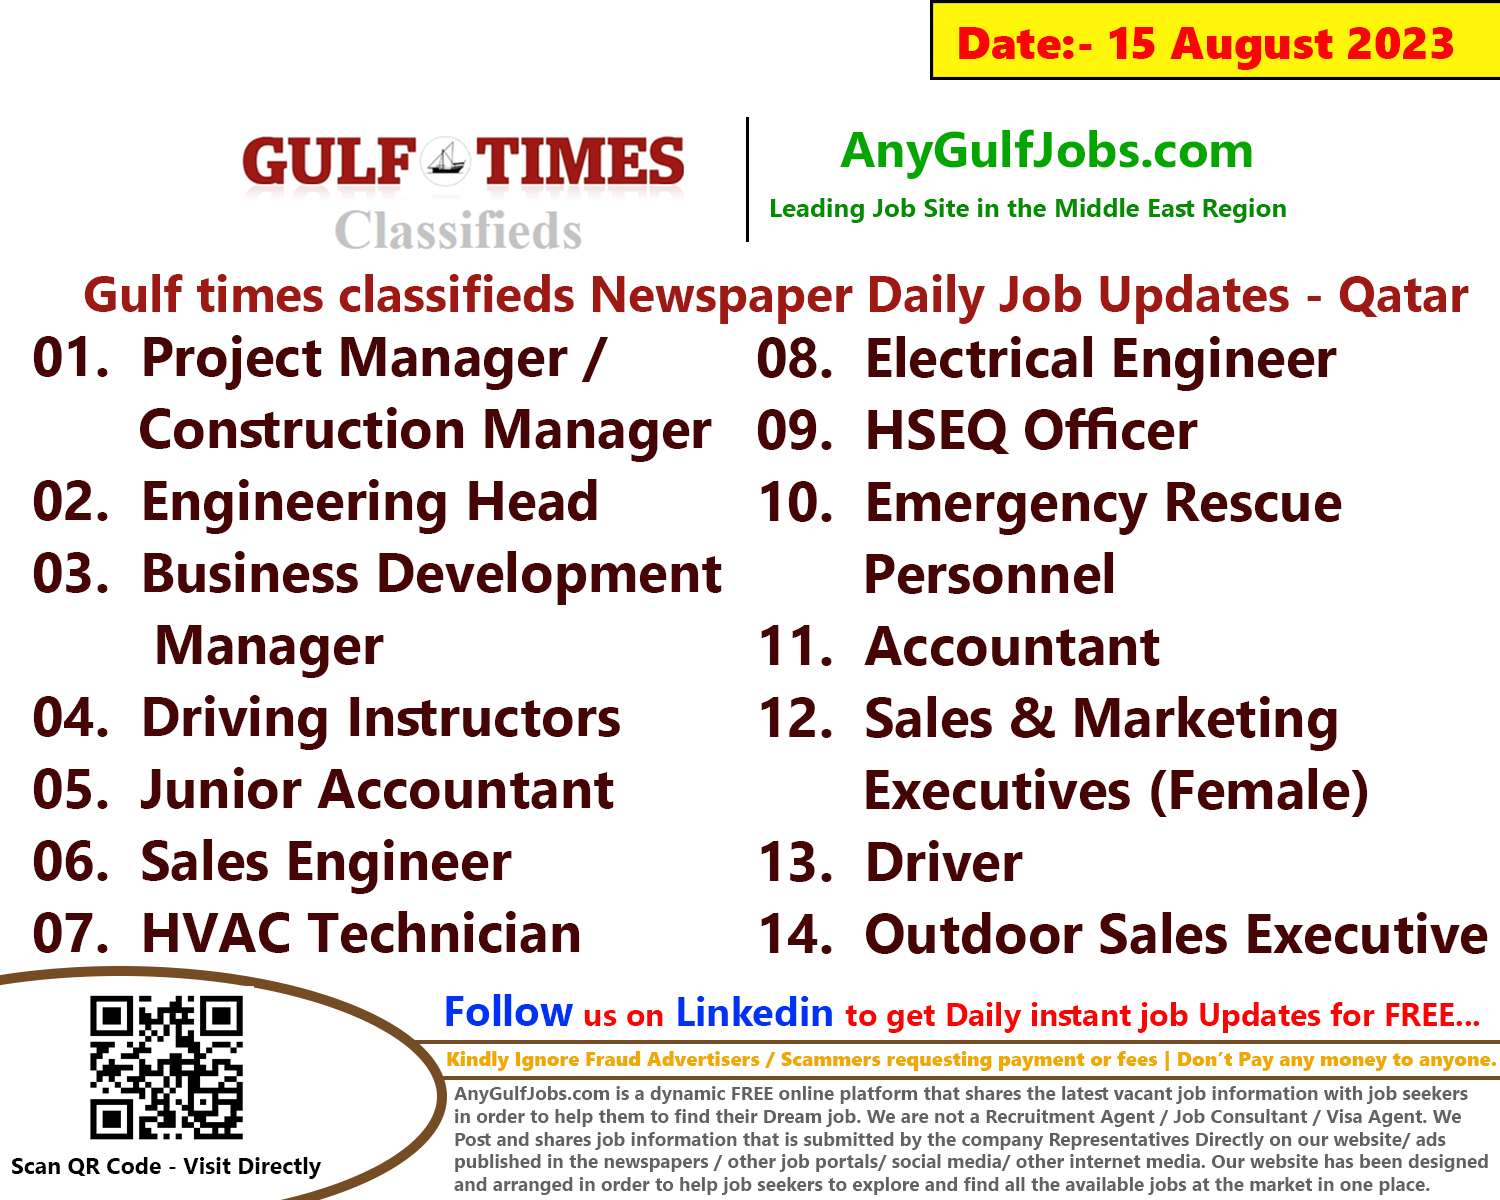 Gulf times classifieds Job Vacancies Qatar - 15 August 2023